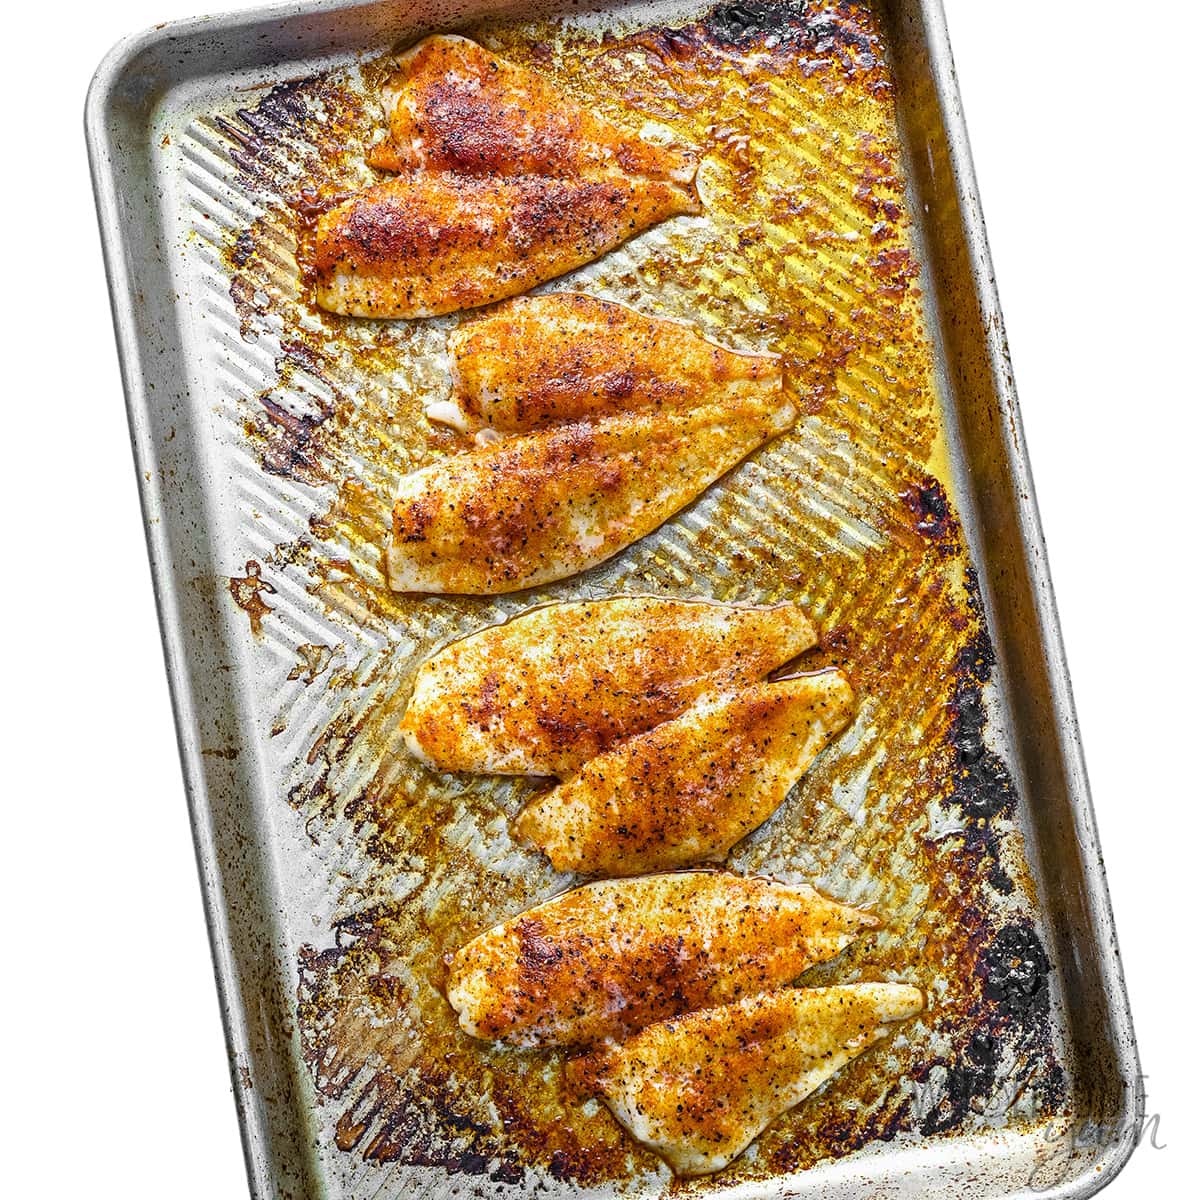 Baked flounder on a sheet pan.